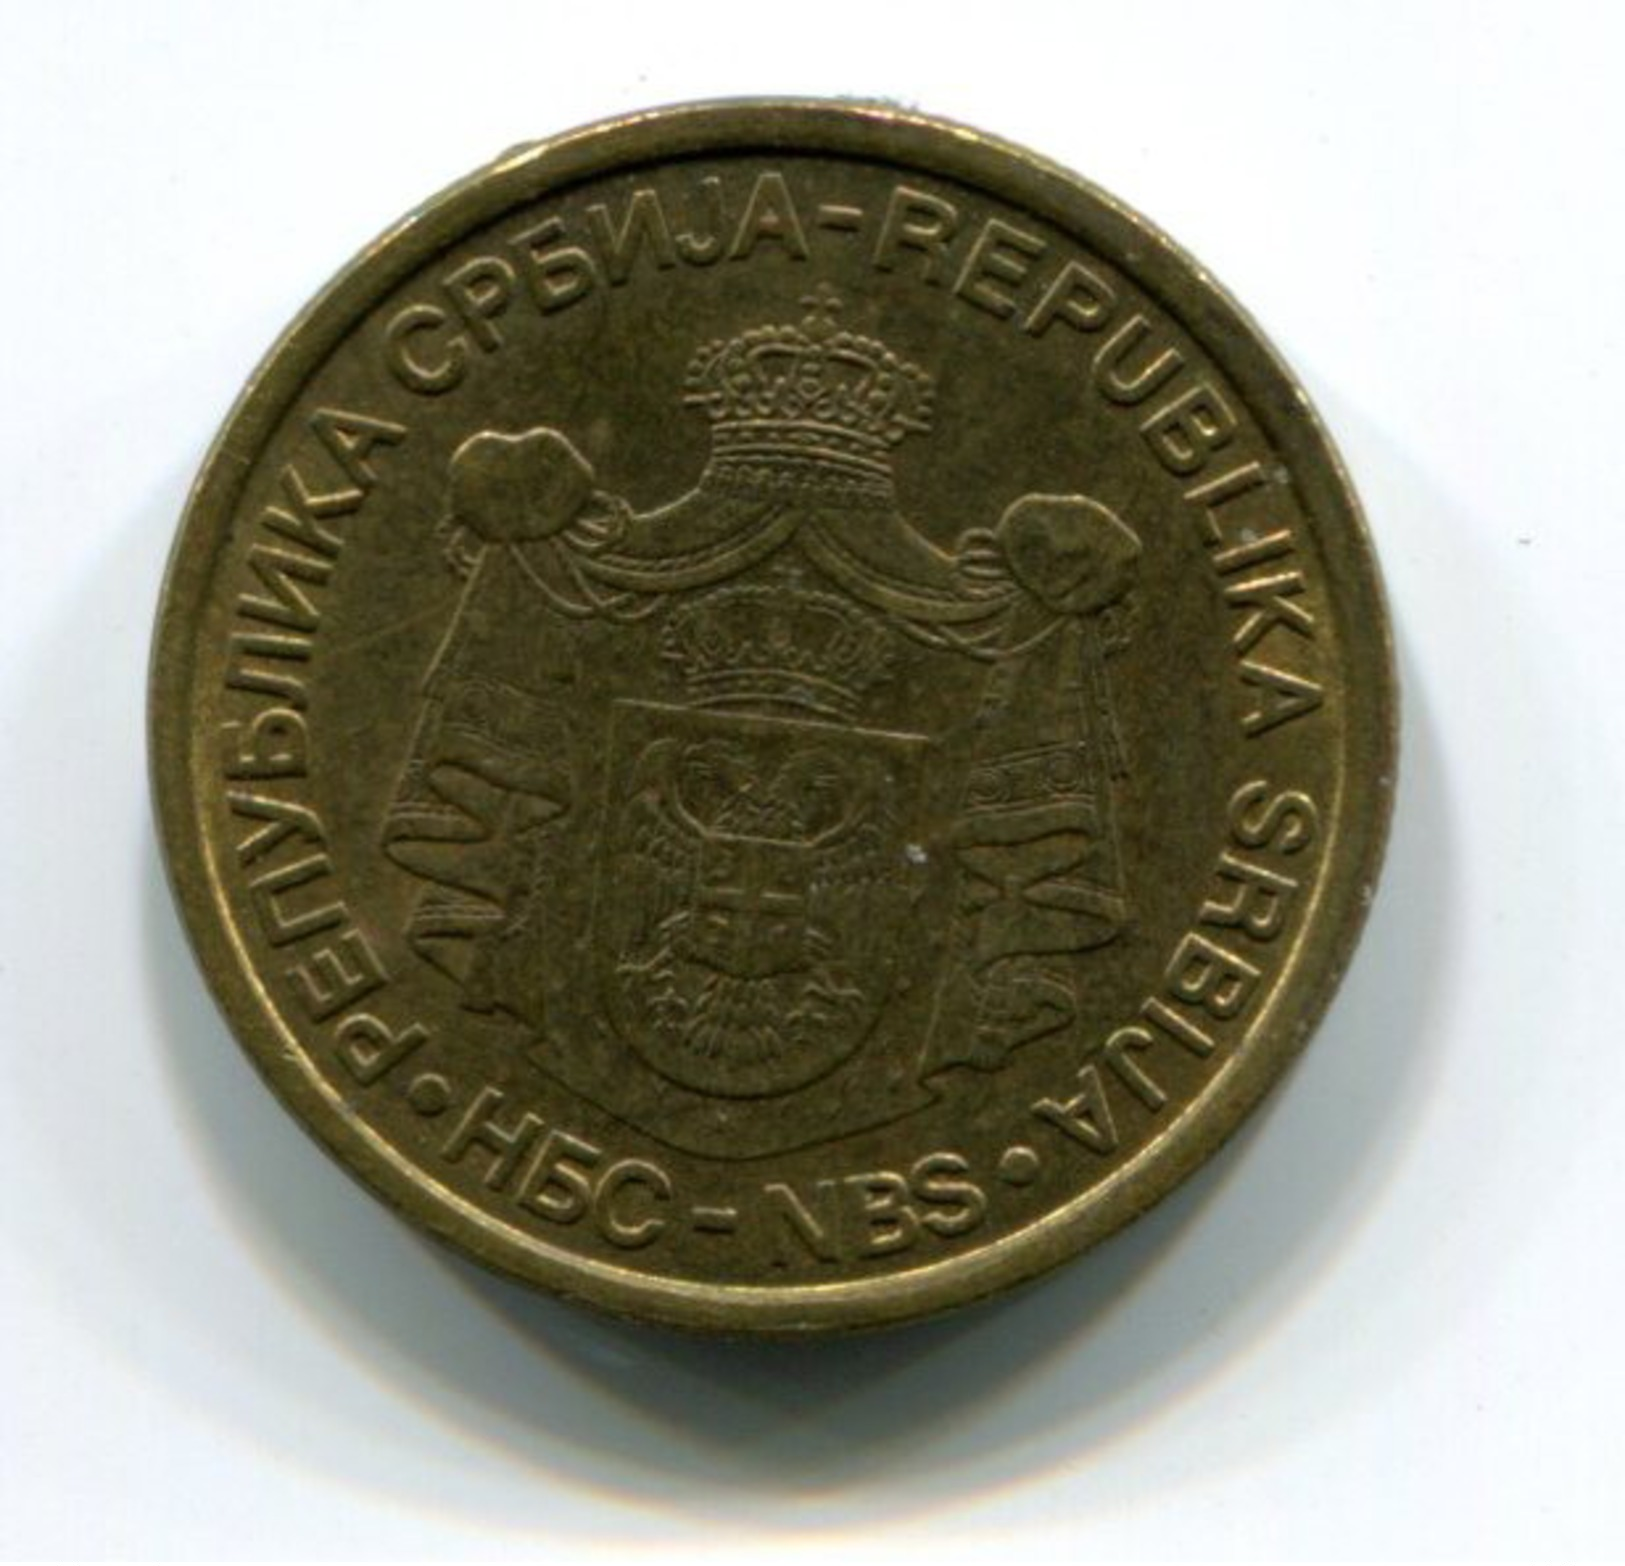 2010 Serbia 1 Dinar Coin - Servië